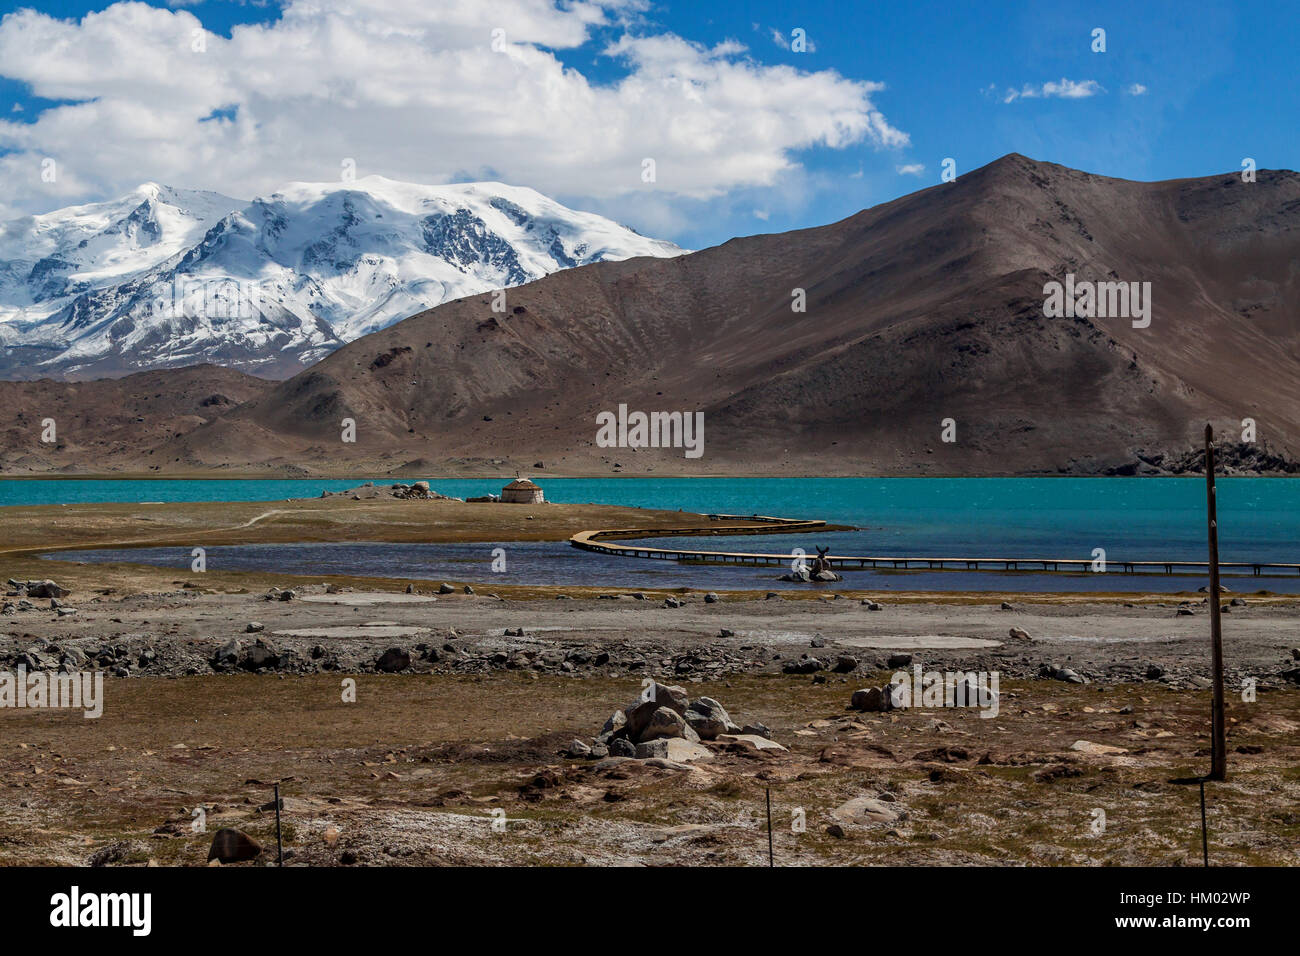 Maztag Ata Montaña. Paisaje alrededor del lago KaraKul, Región Autónoma de Xinjiang, China. (Kirghiz: "Lago negro") Foto de stock